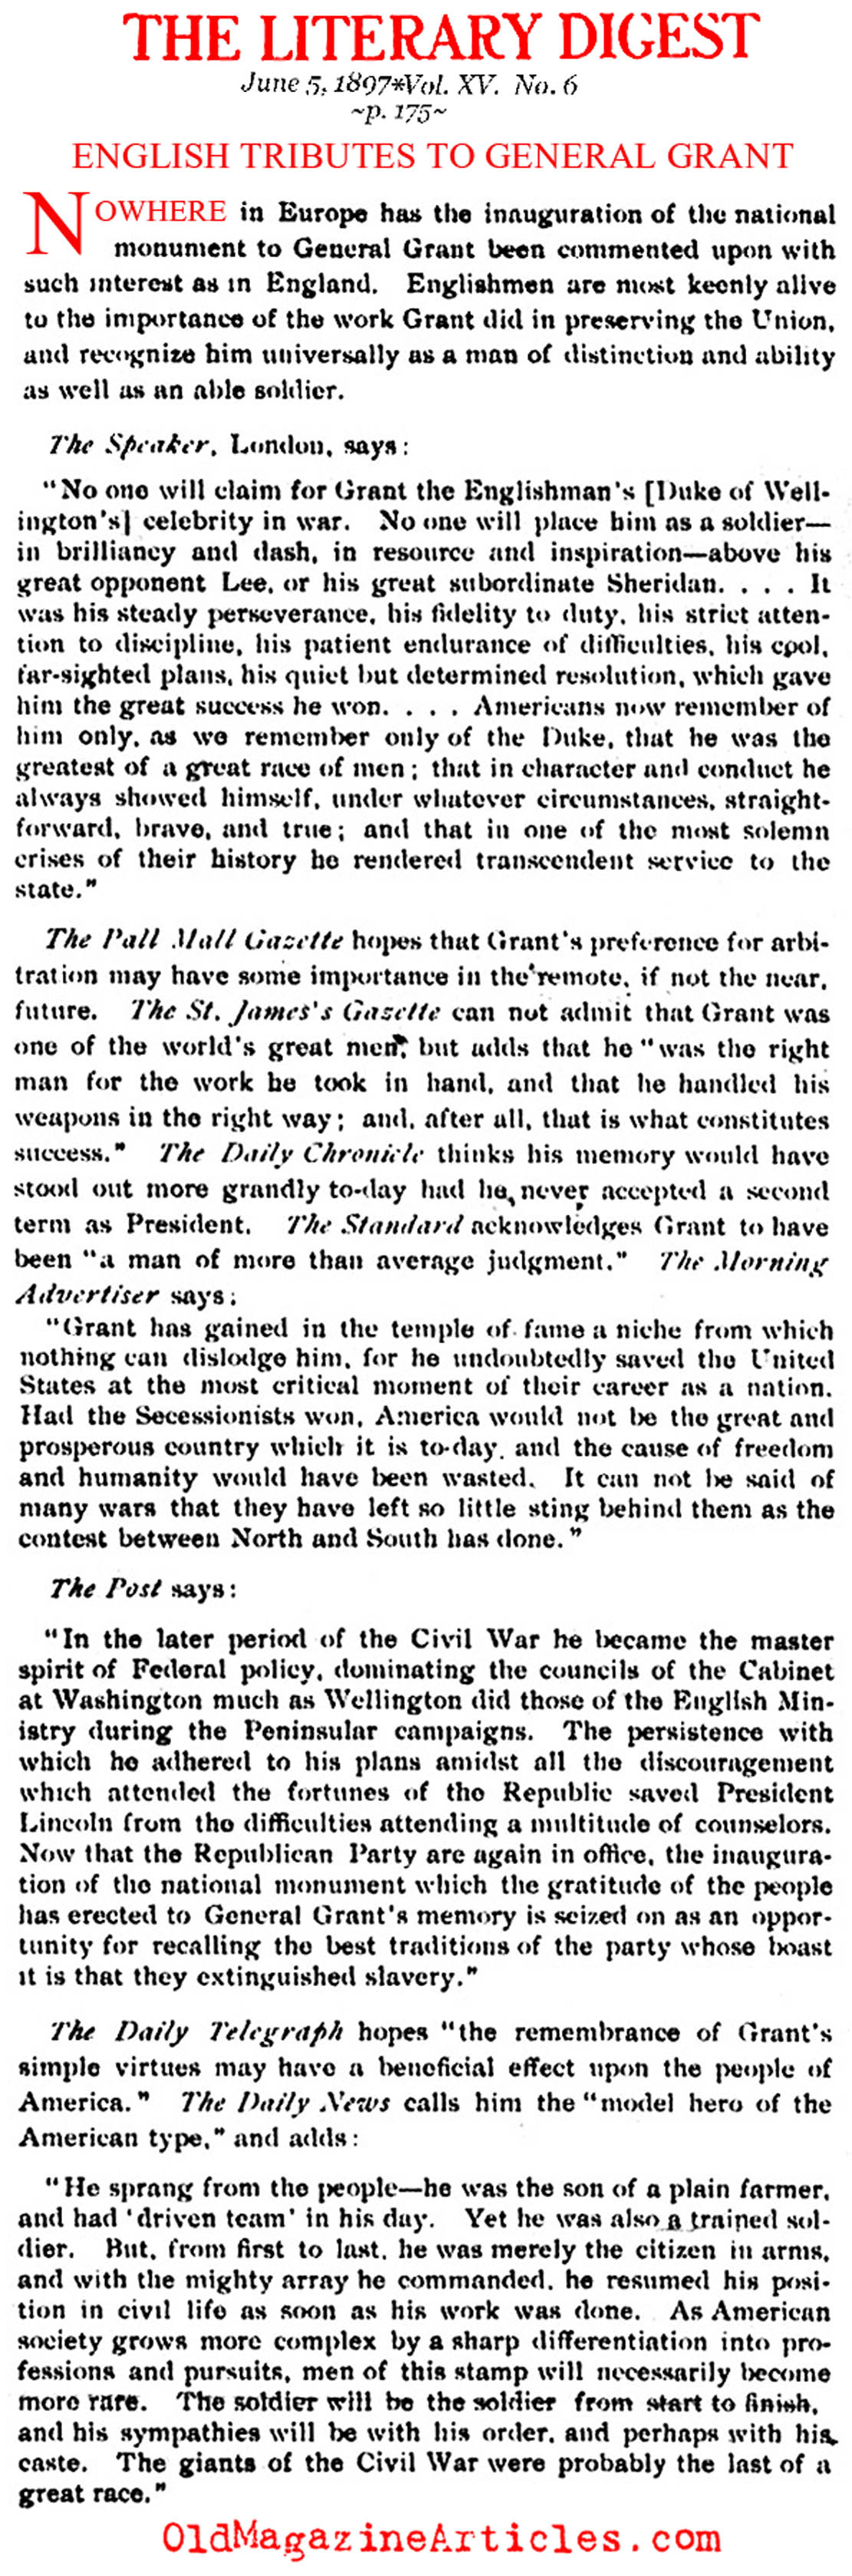 British Praise for General Grant (Literary Digest, 1897)